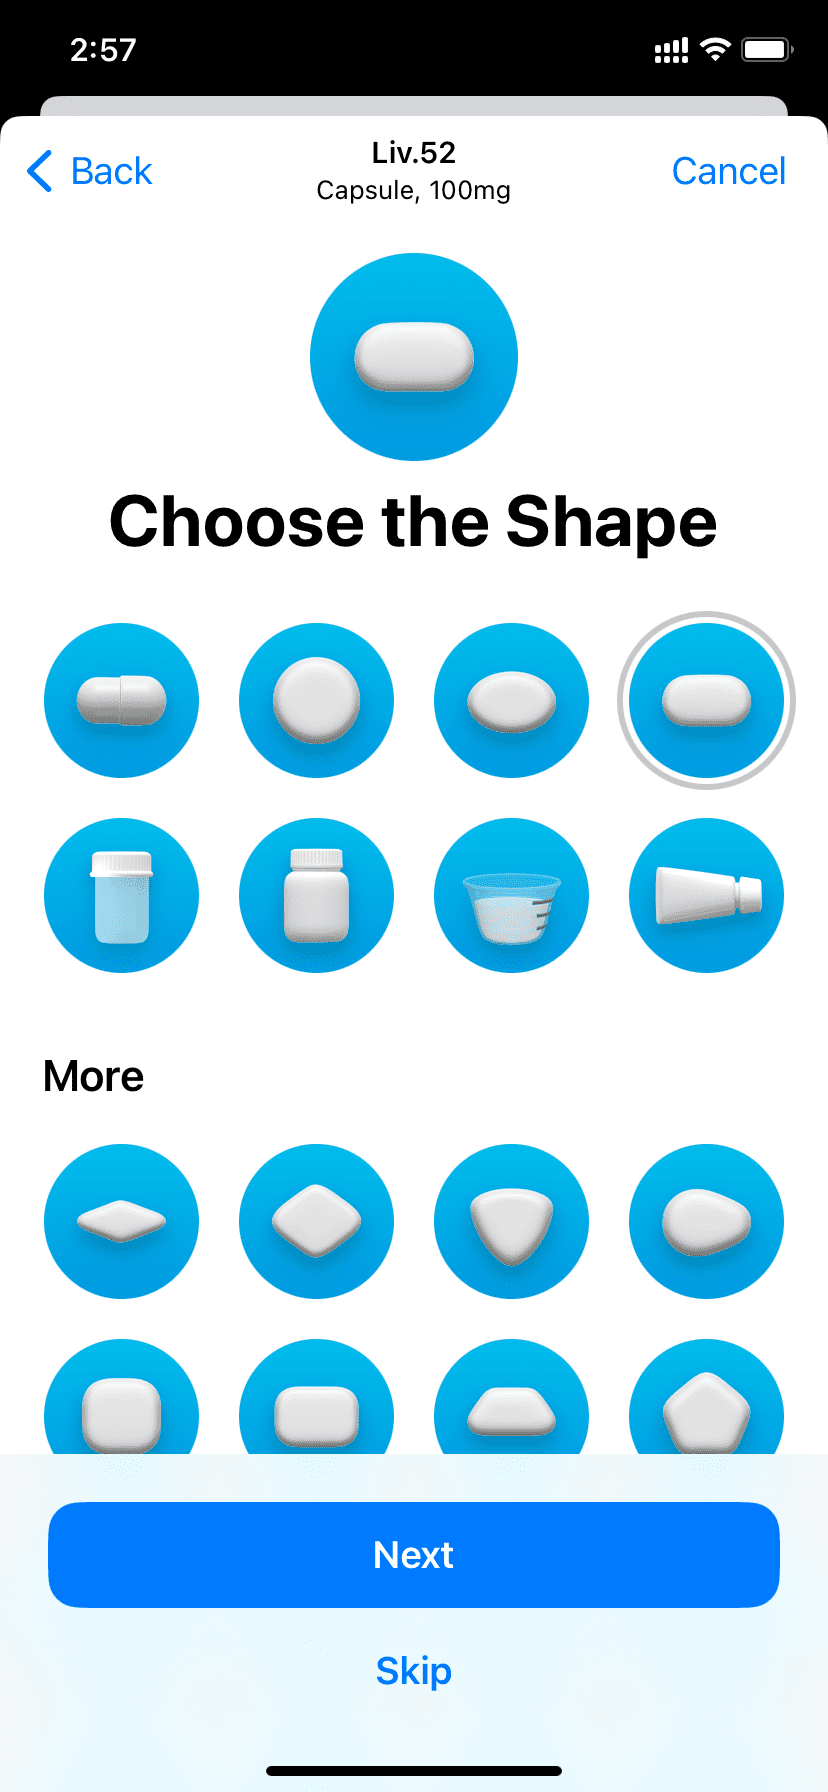 Choose shape of medicine in iPhone Health app